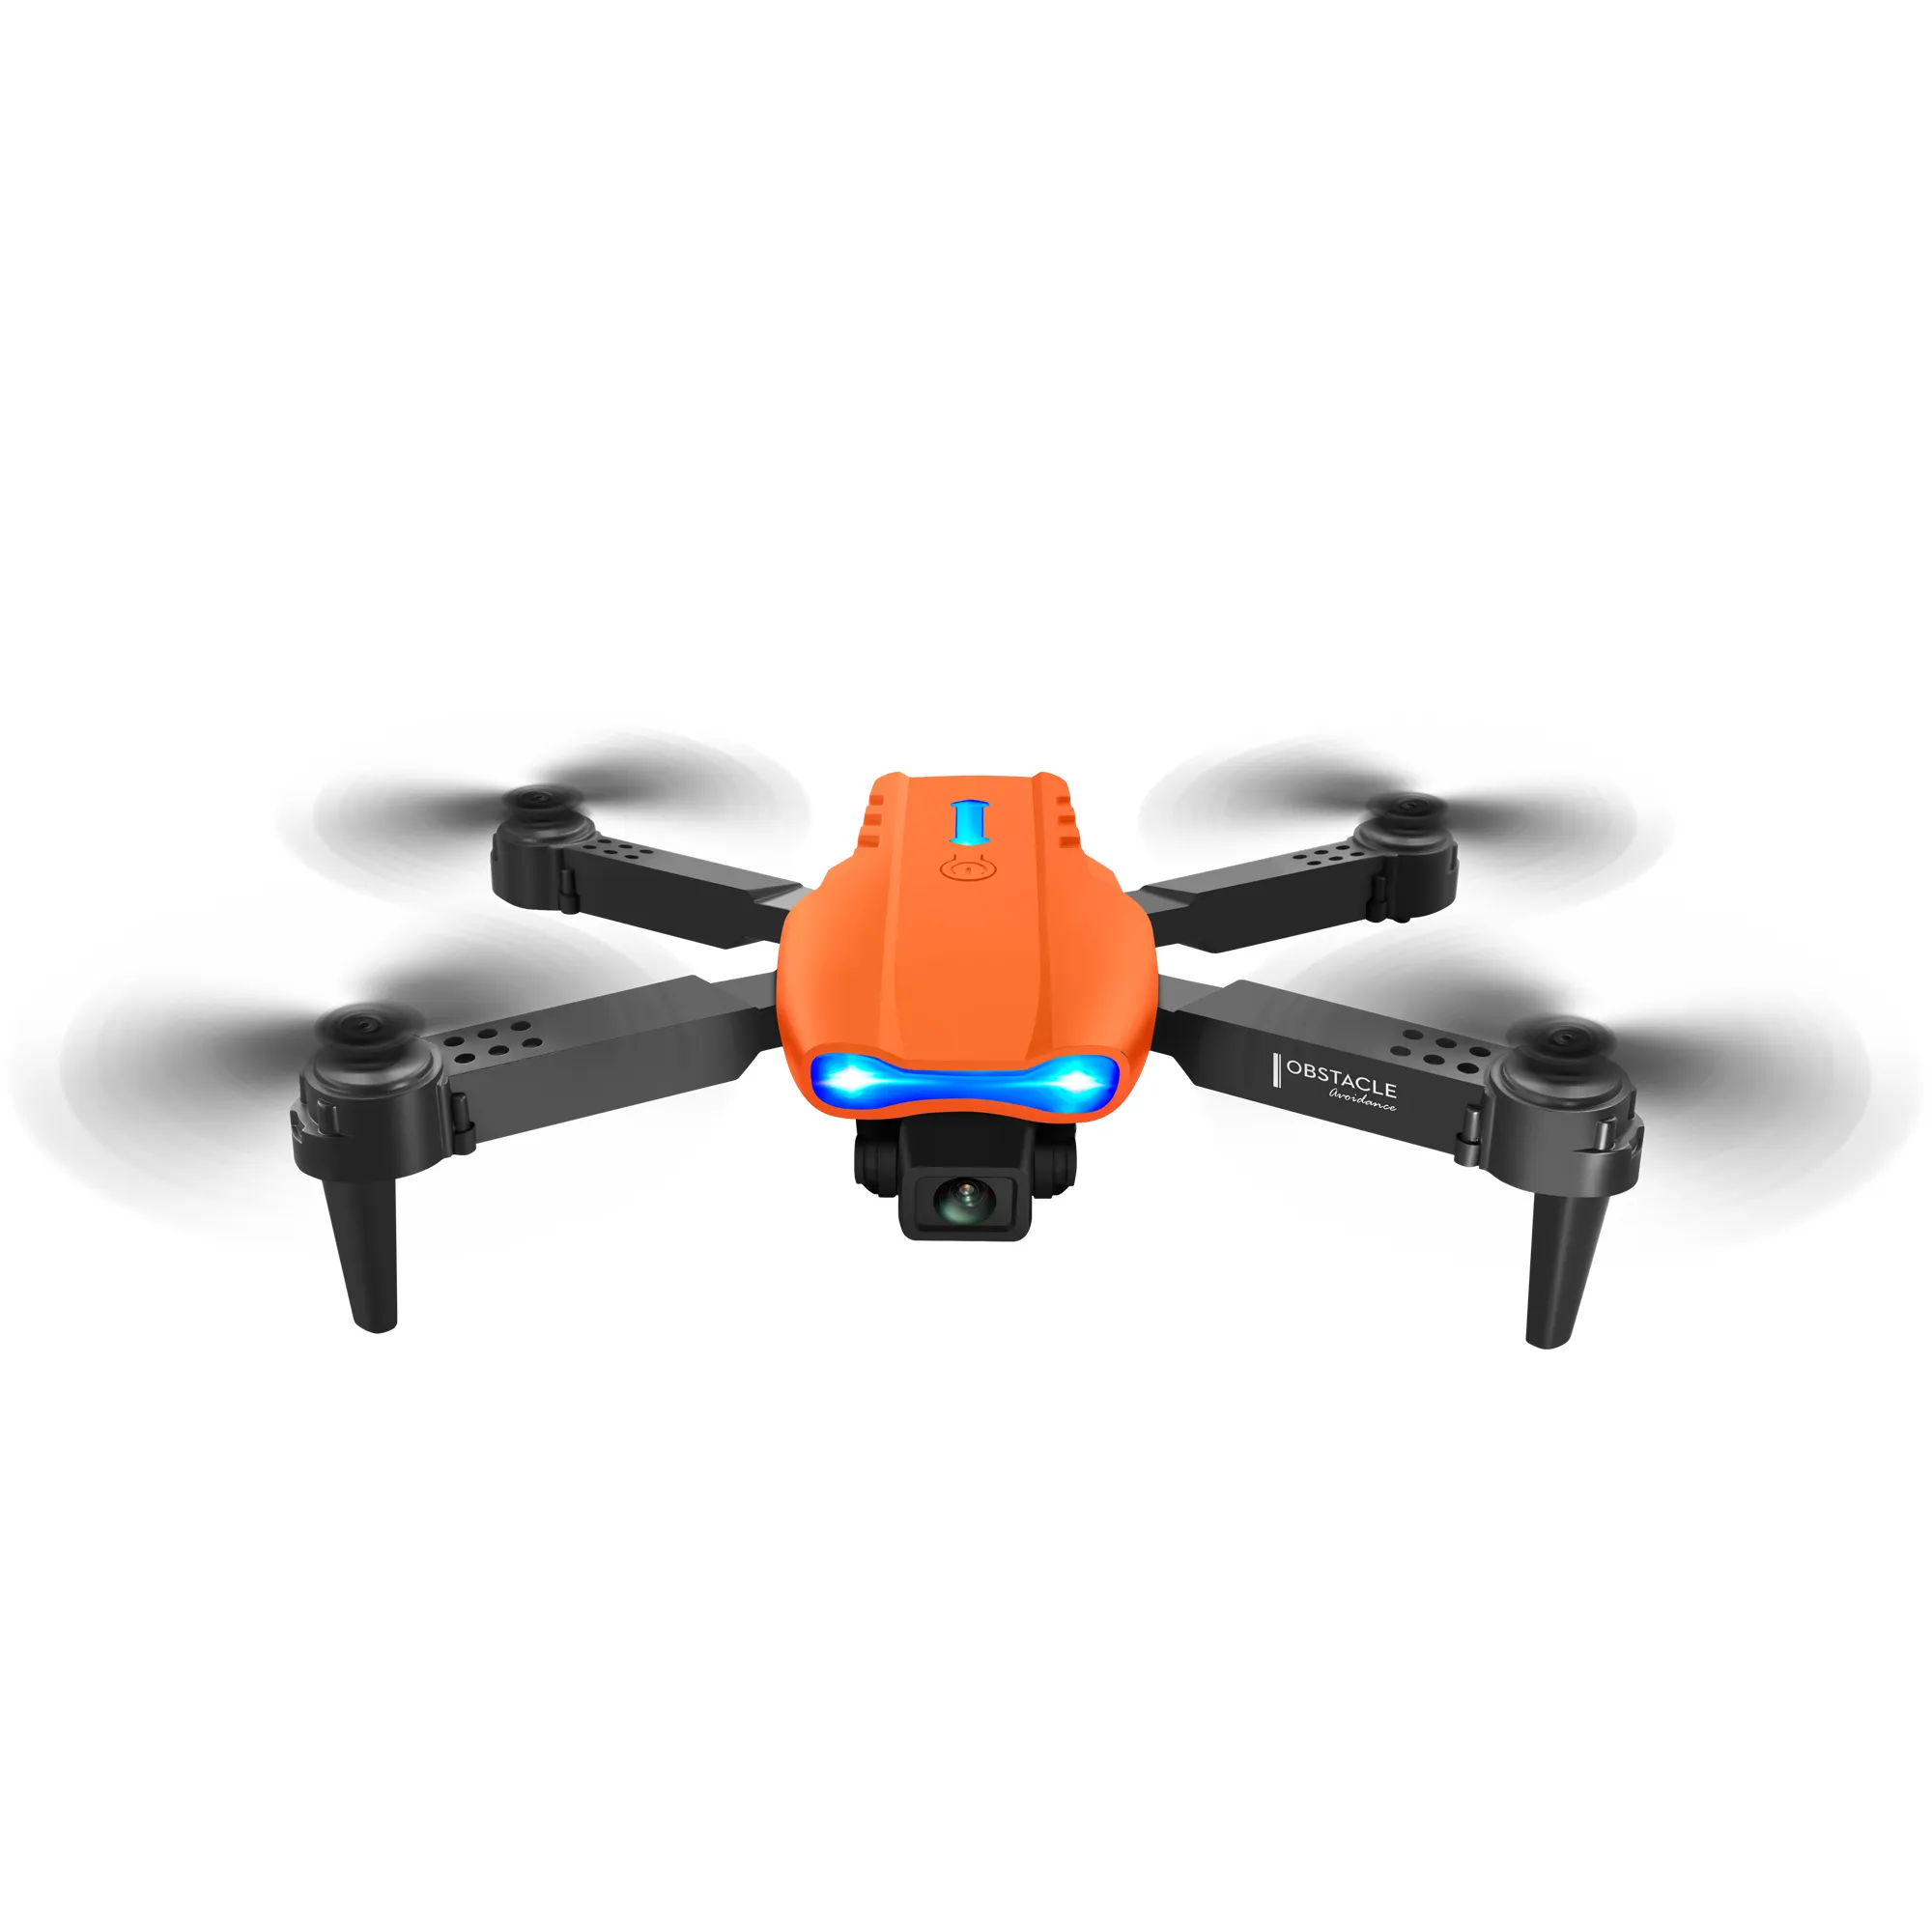 Drone remote control app